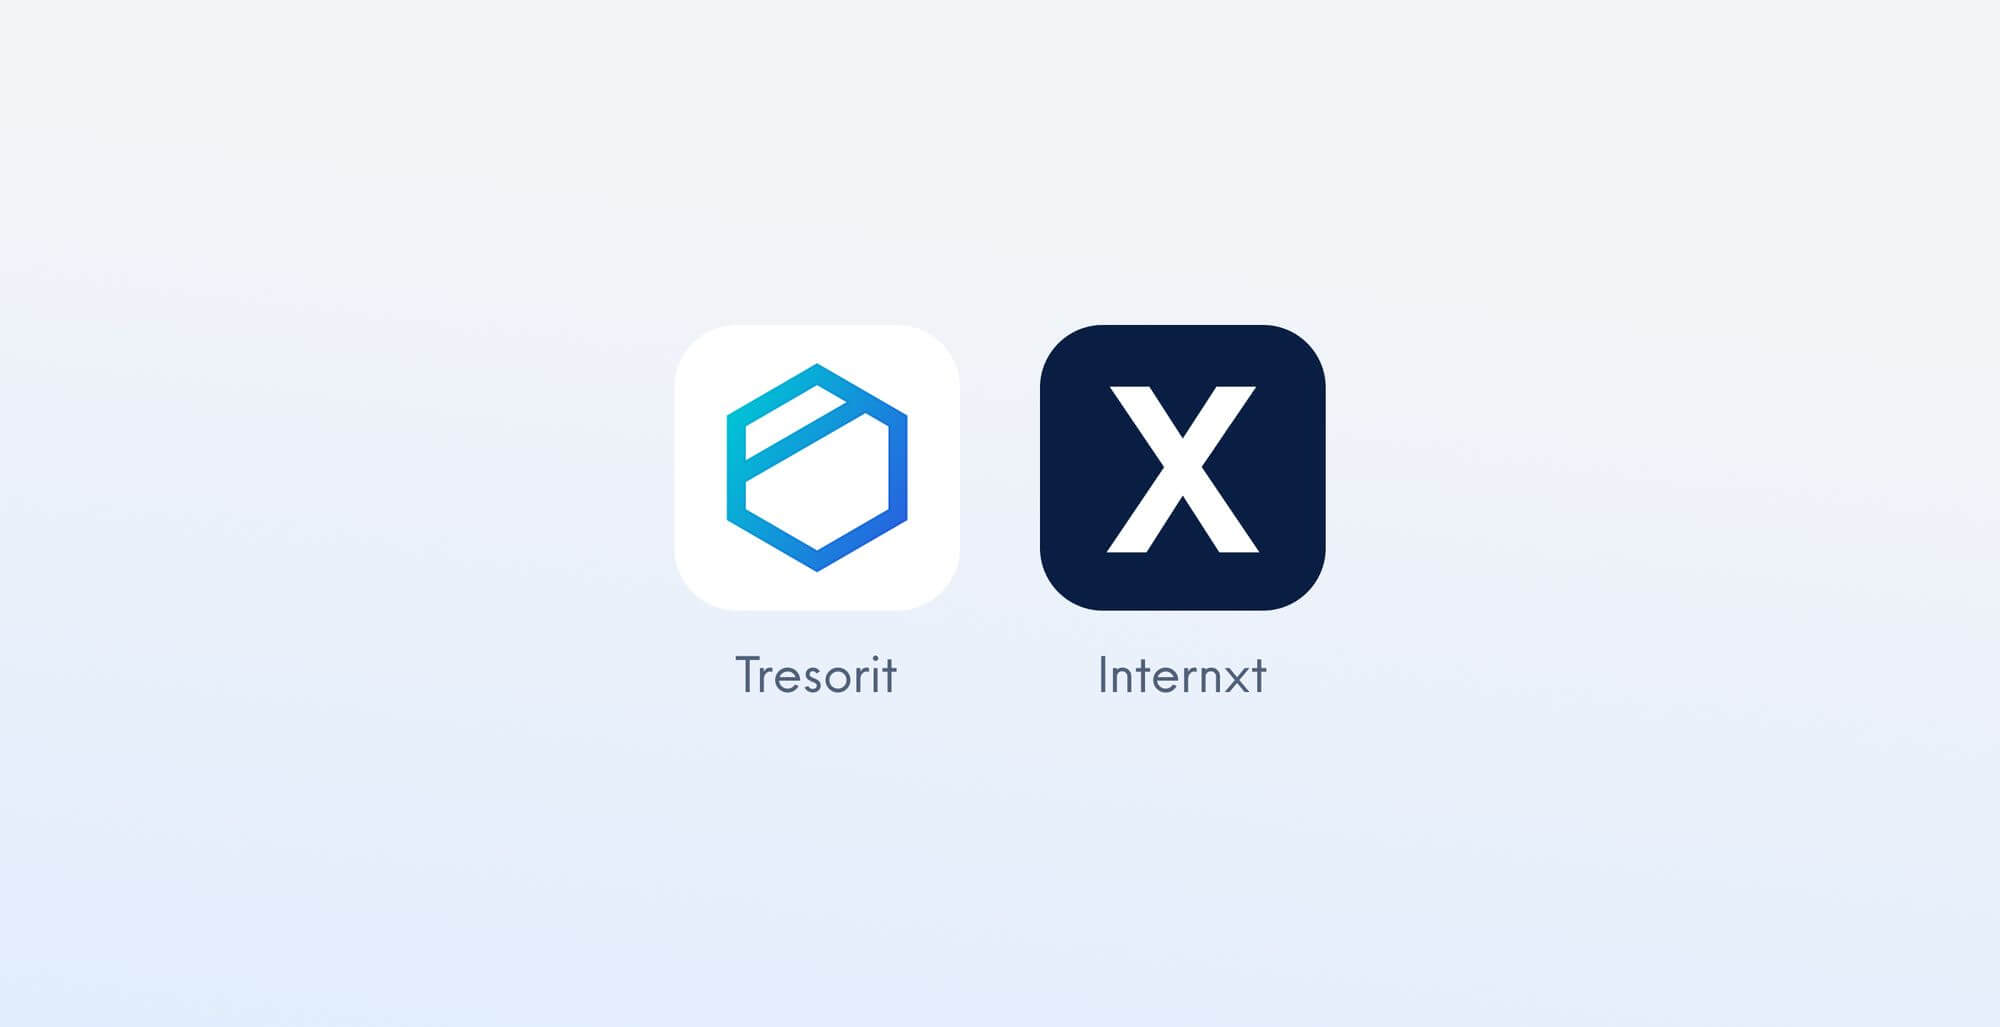 Internxt cloud storage logo and Tresorit logo